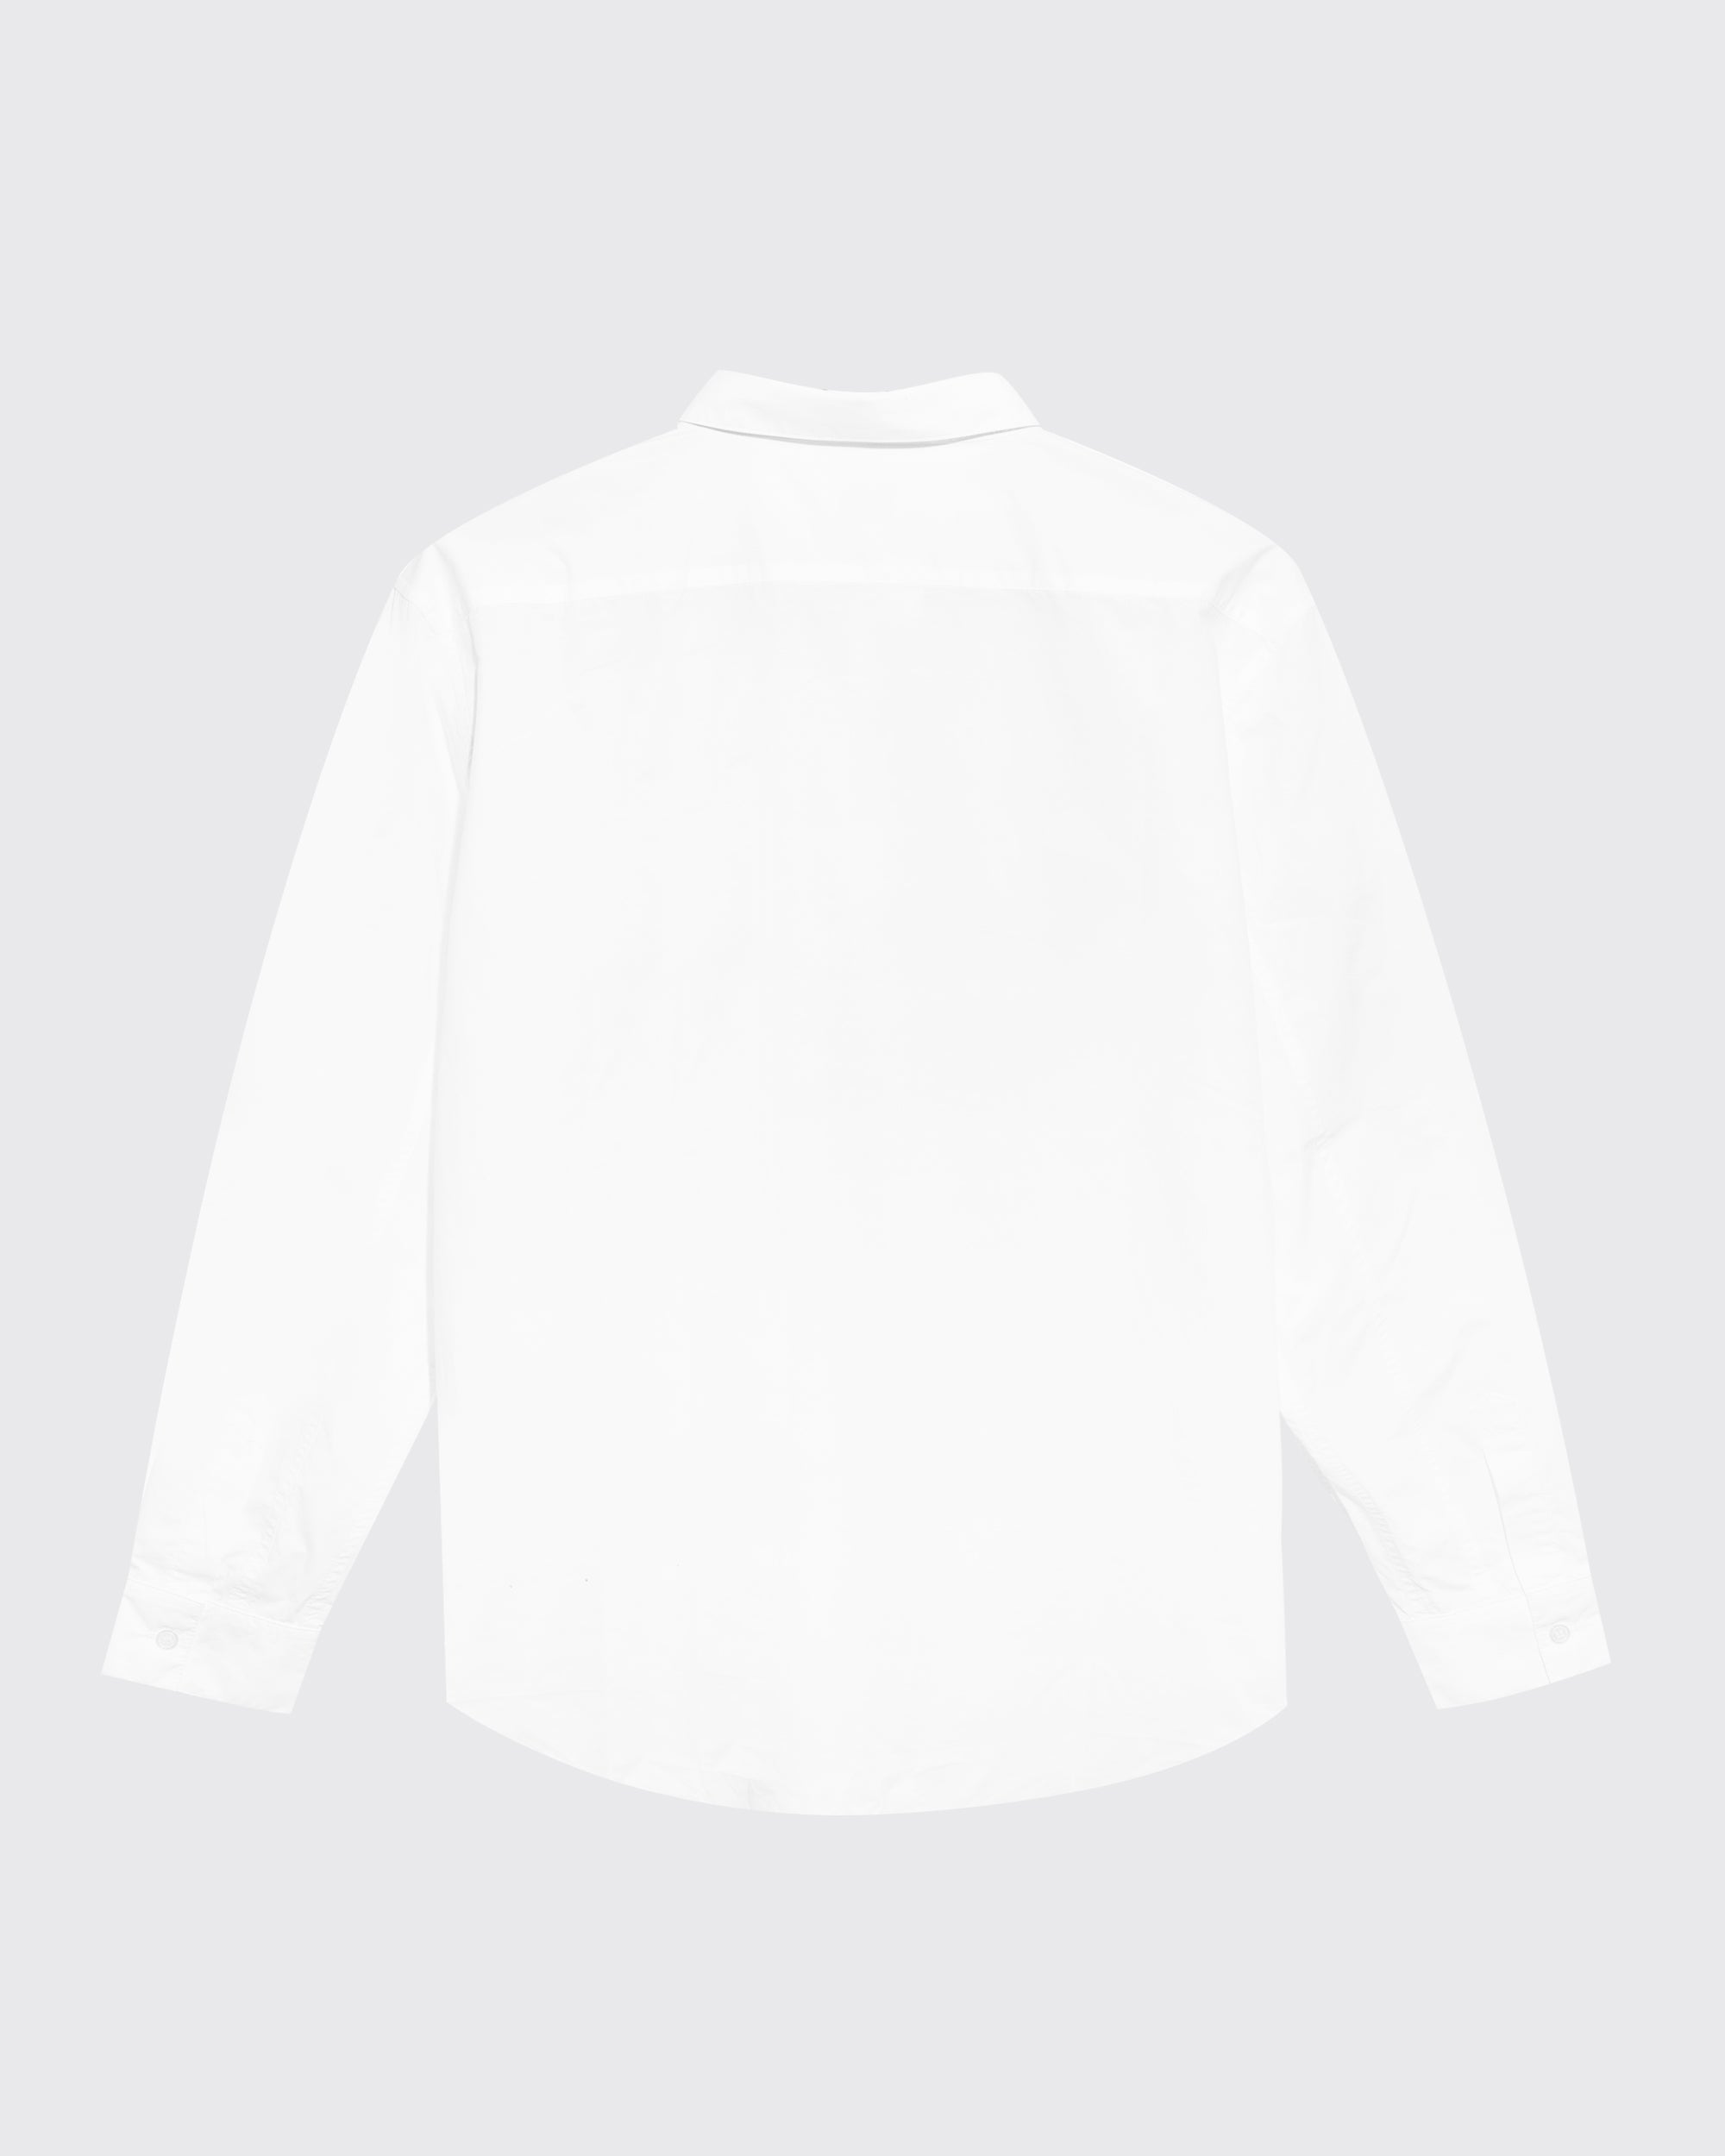 Reception - Shirt - Daily - Loose Financial Shirt - White